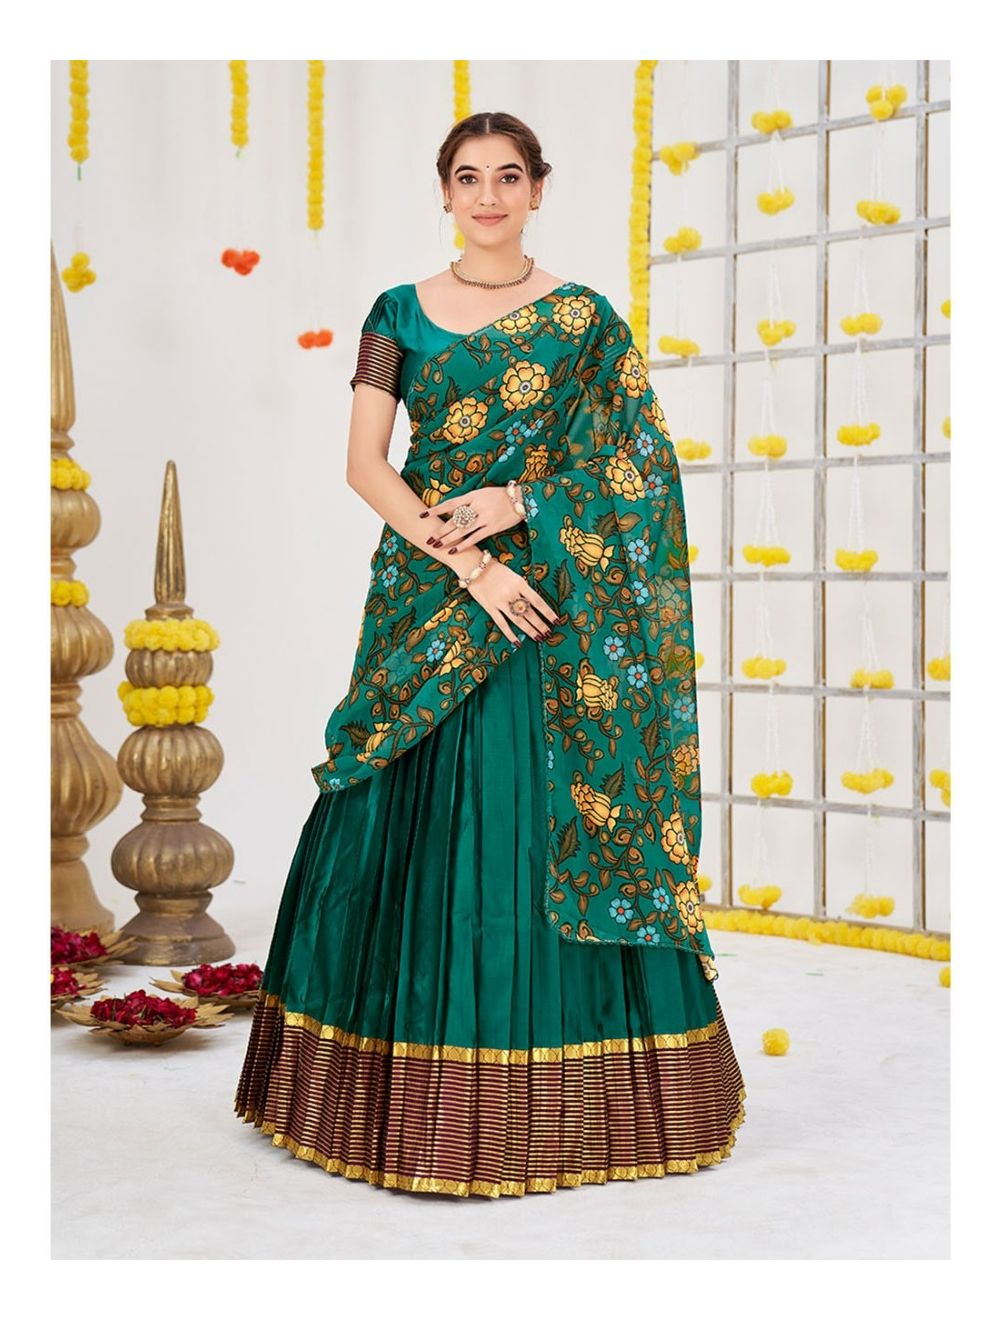 Women's Banarsi Designer Saree Blouse Beautiful Lehenga Crop Top Part Wear  Choli | eBay